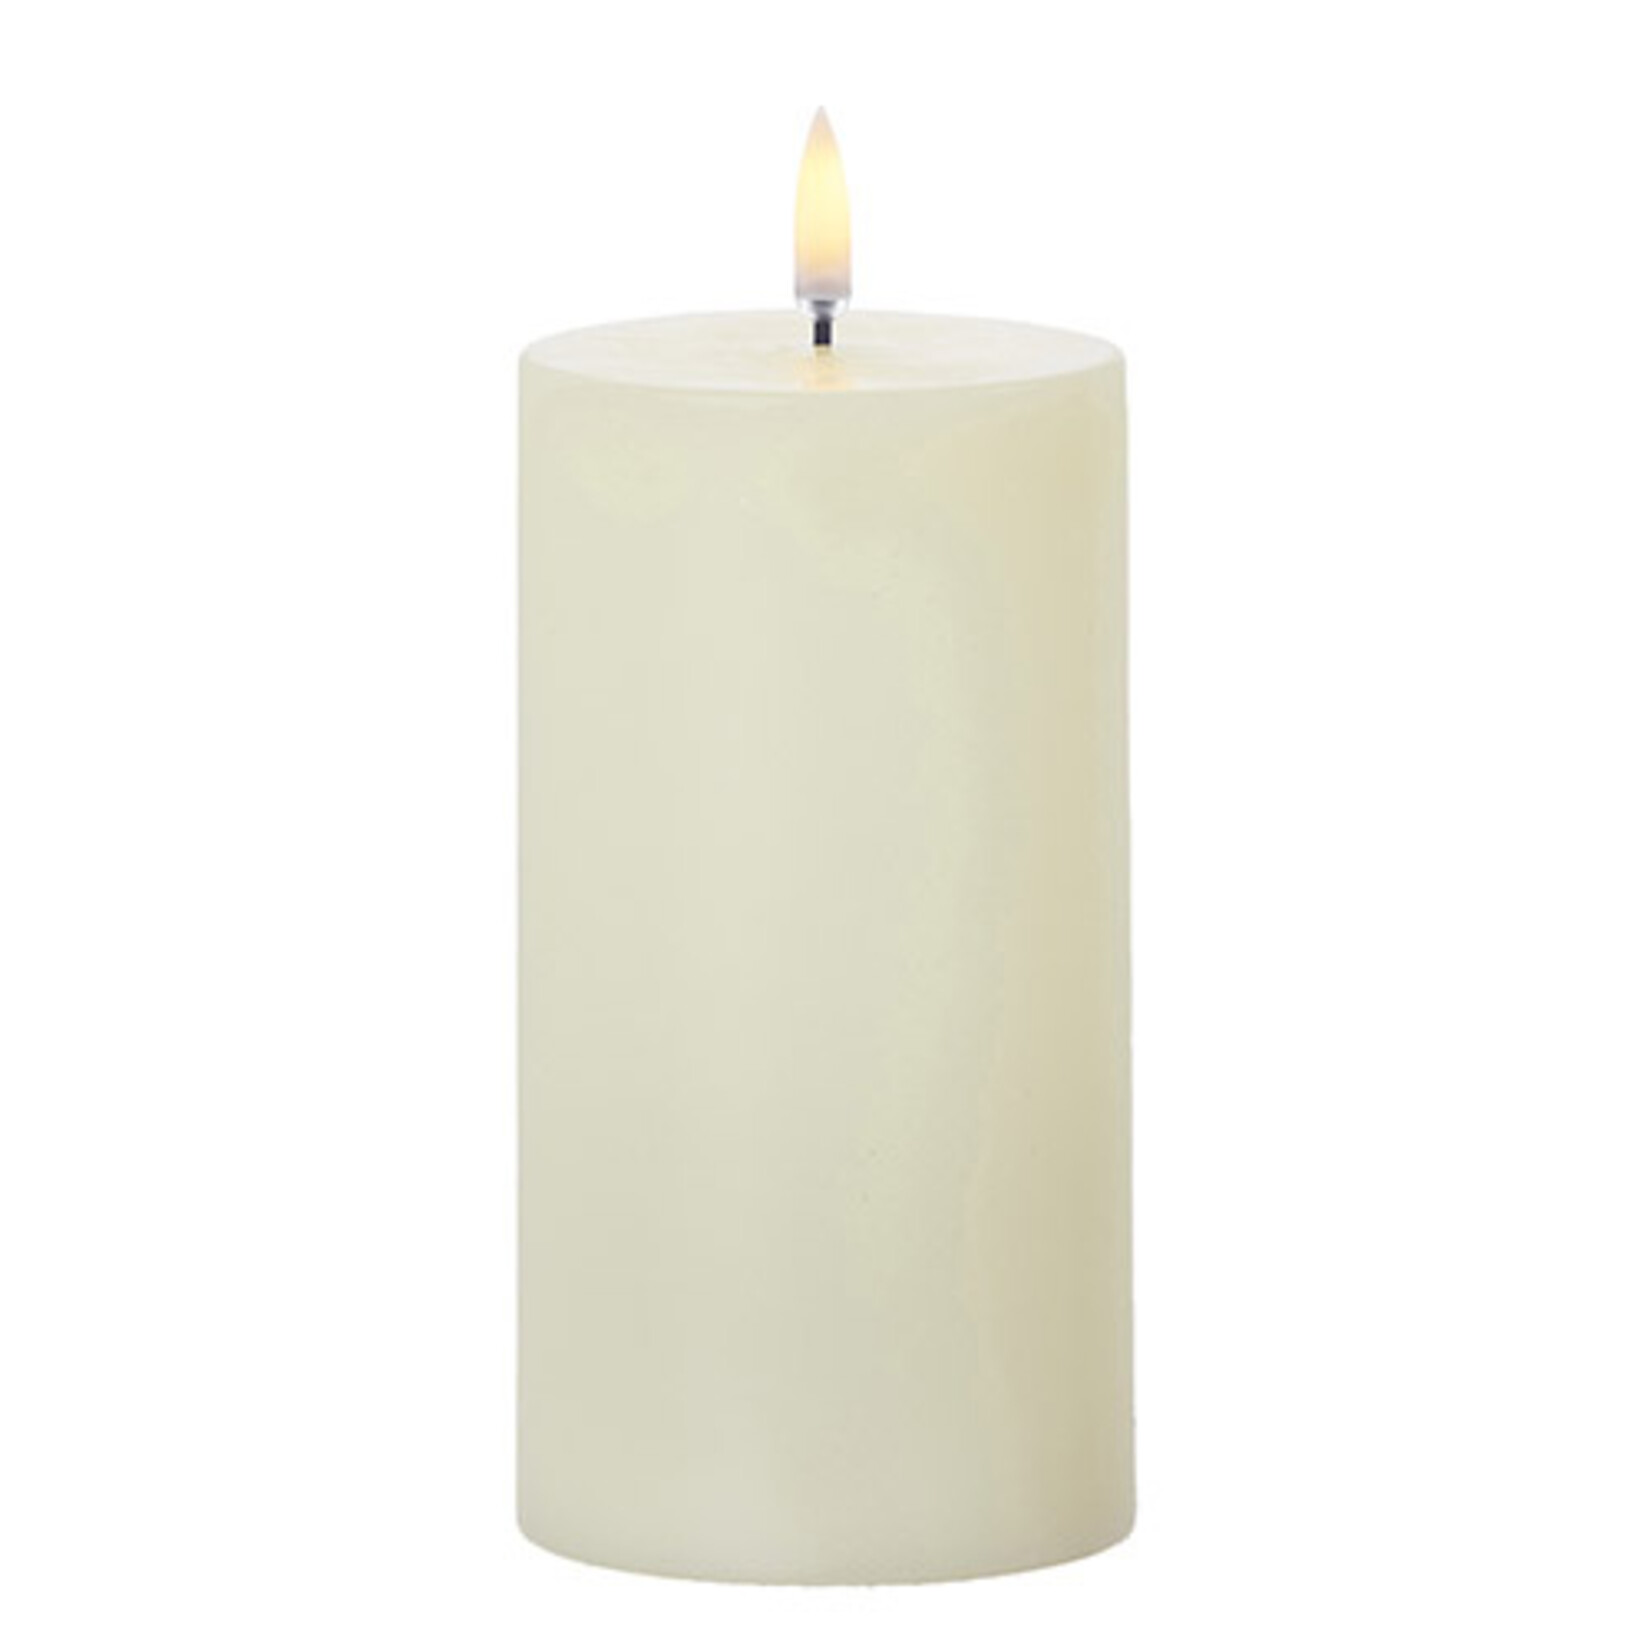 Ivory Pillar Candle 3x7"